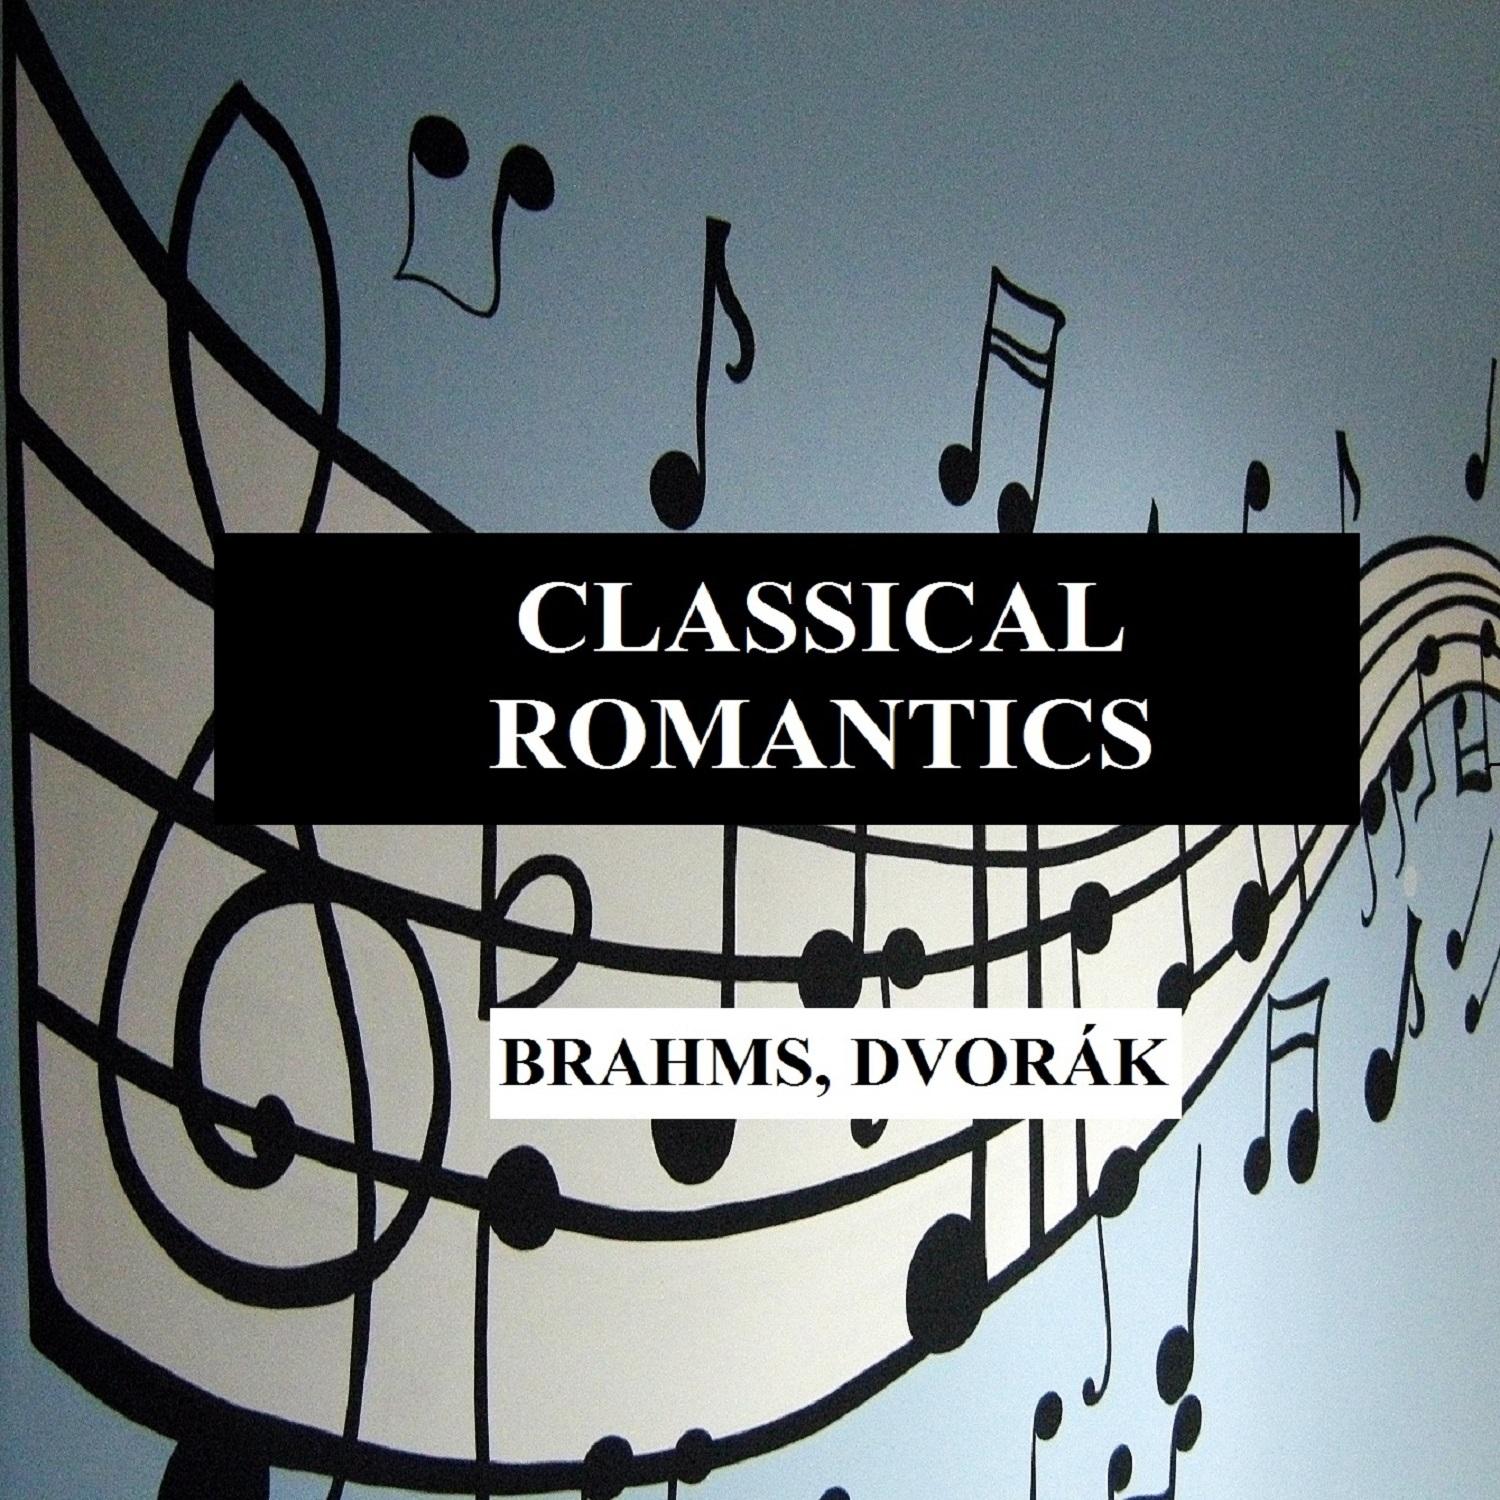 Classical Romantics  Brahms, Dvora k